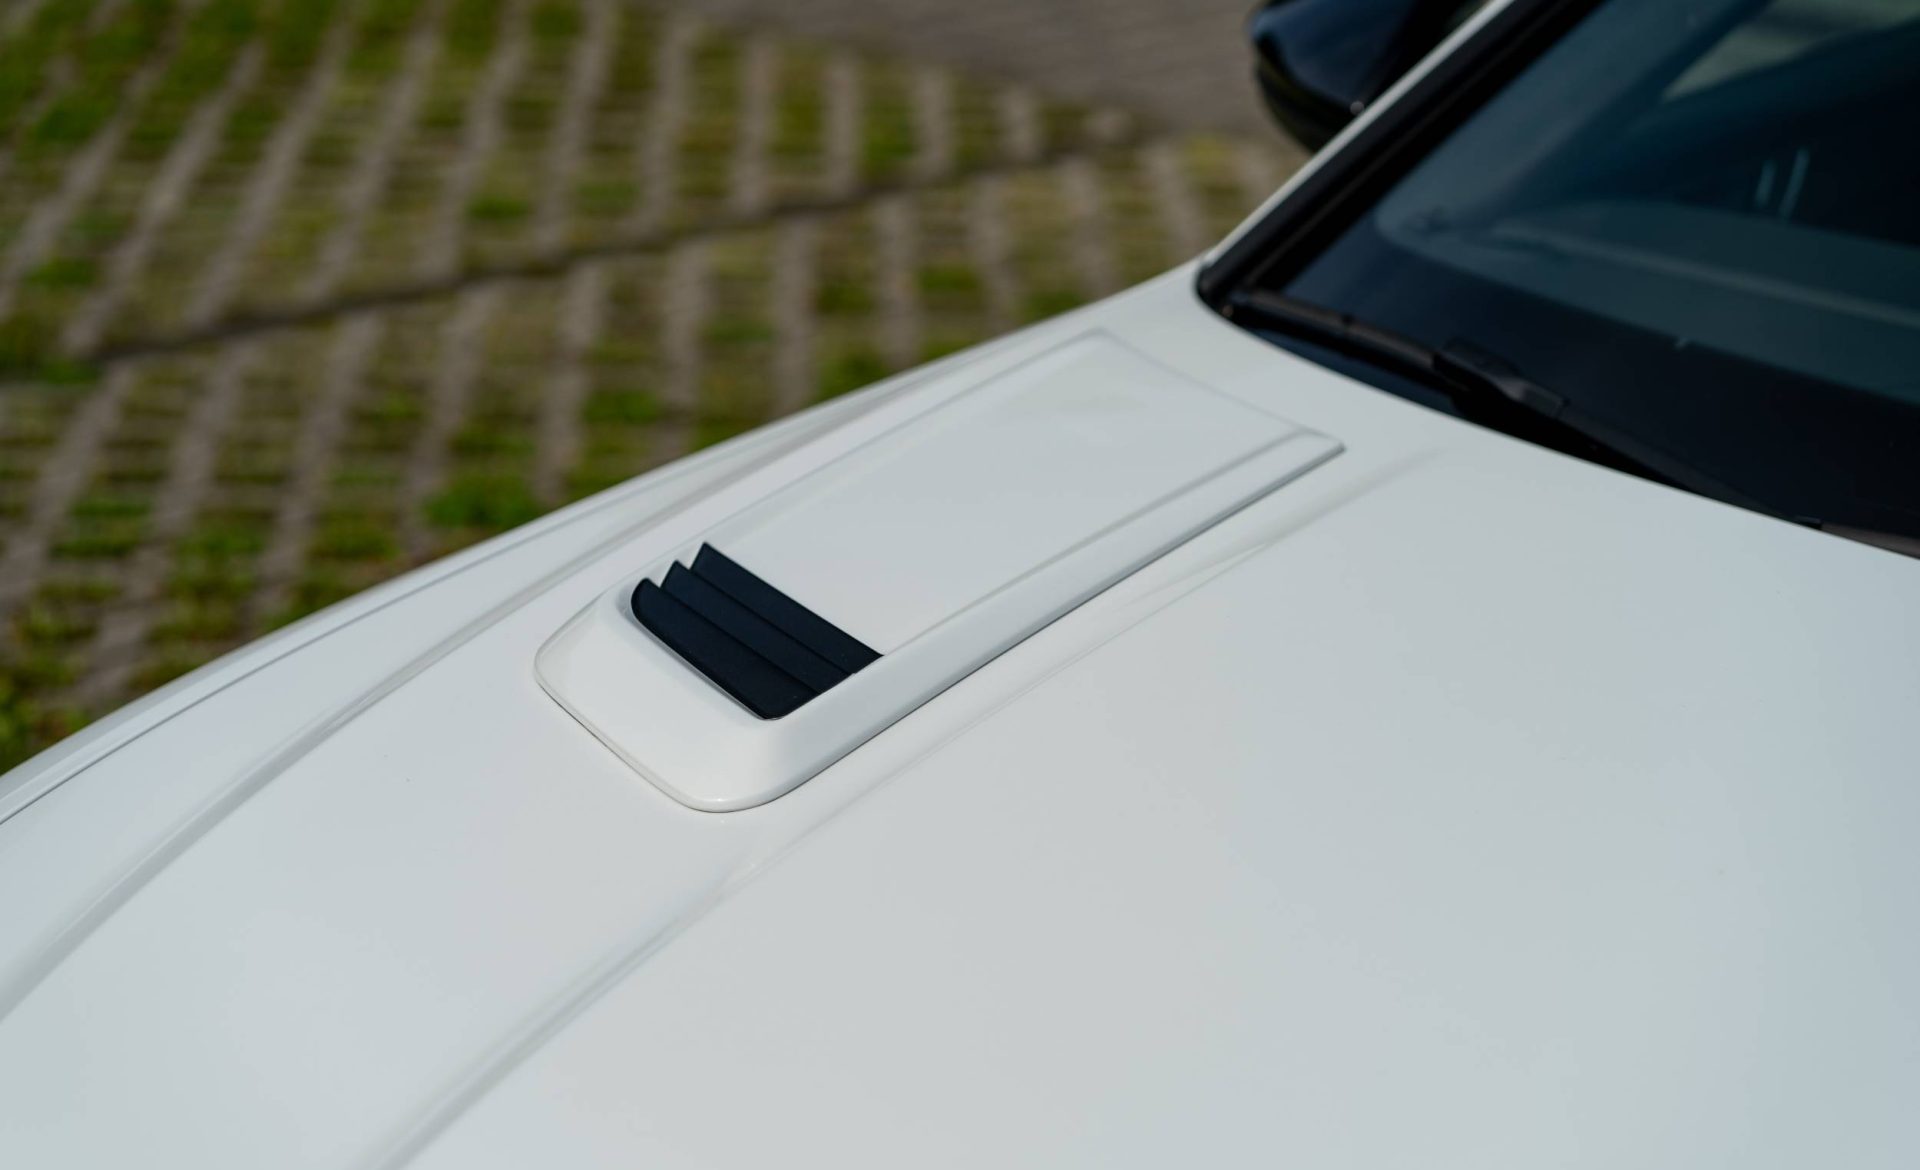 PD6RS Motorhaubenaufsätze 2-tlg. für Audi RS6 C8